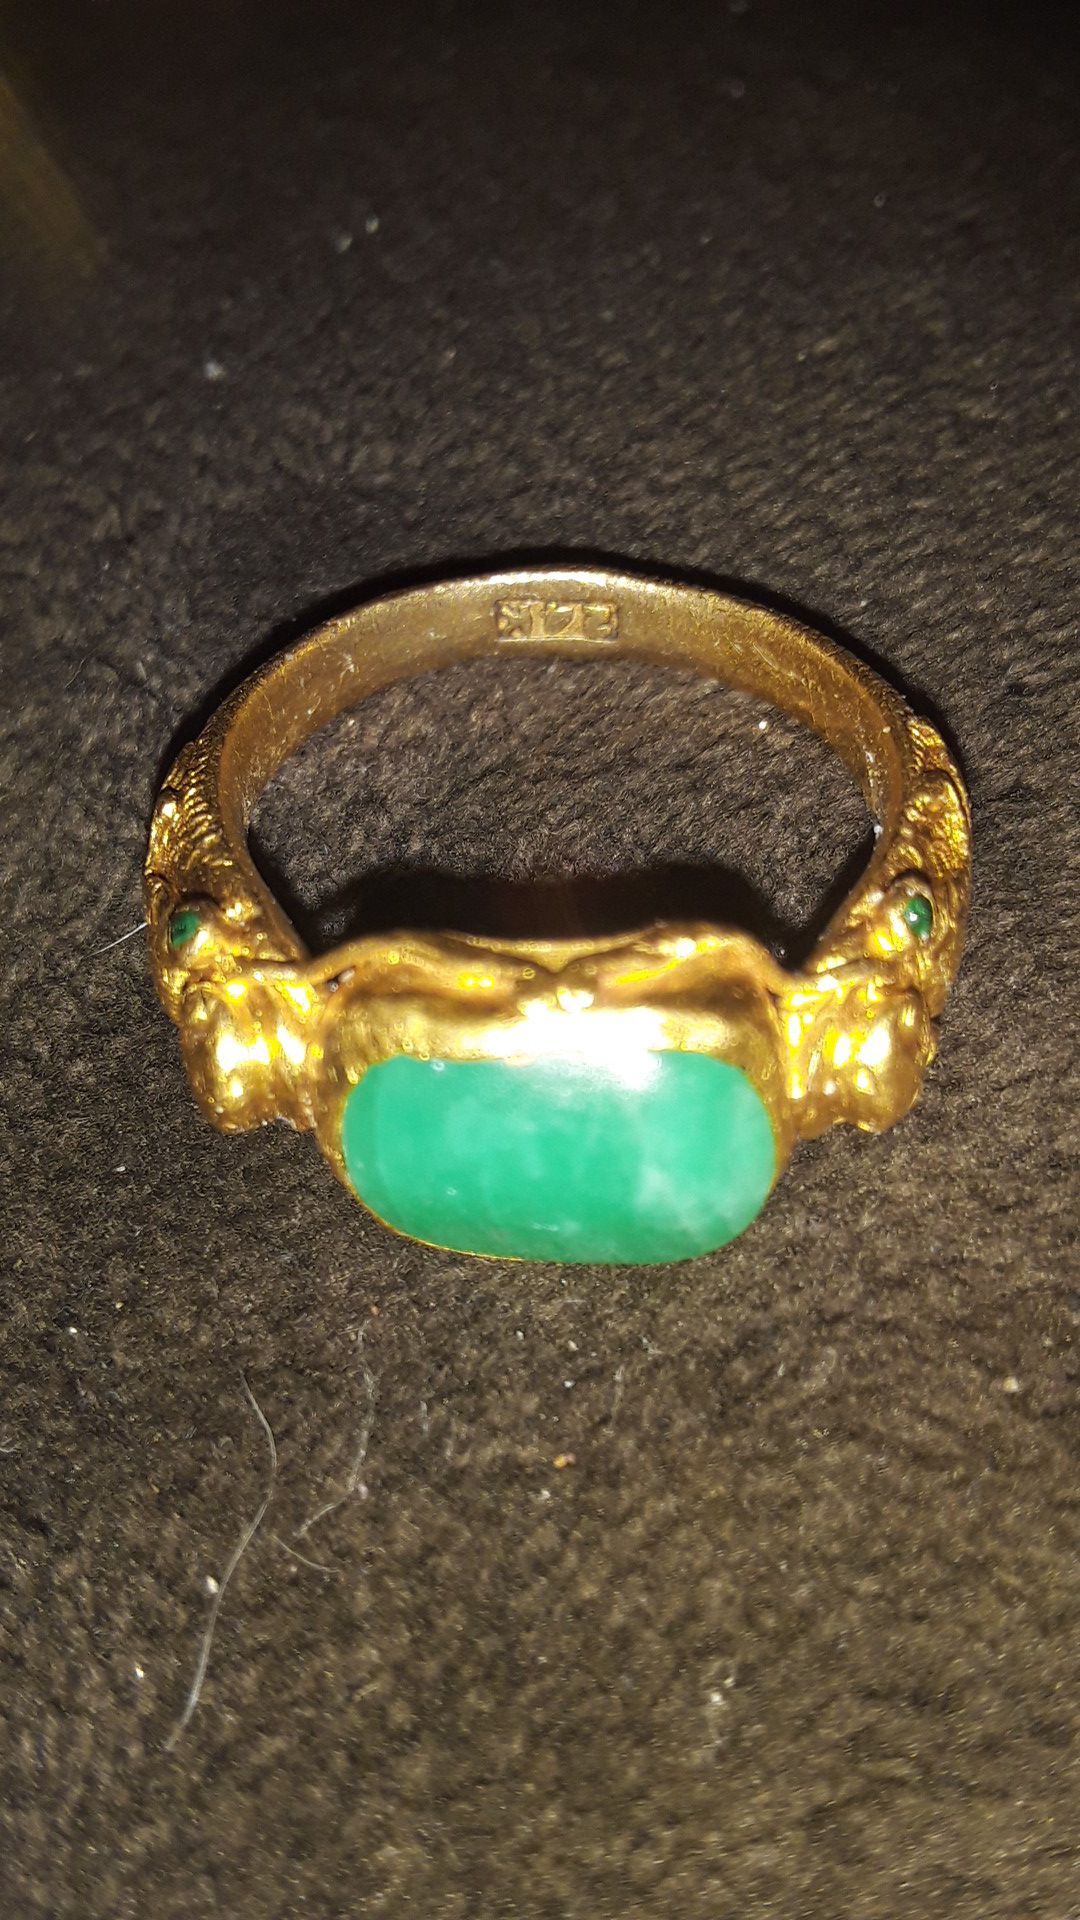 24k gold ring